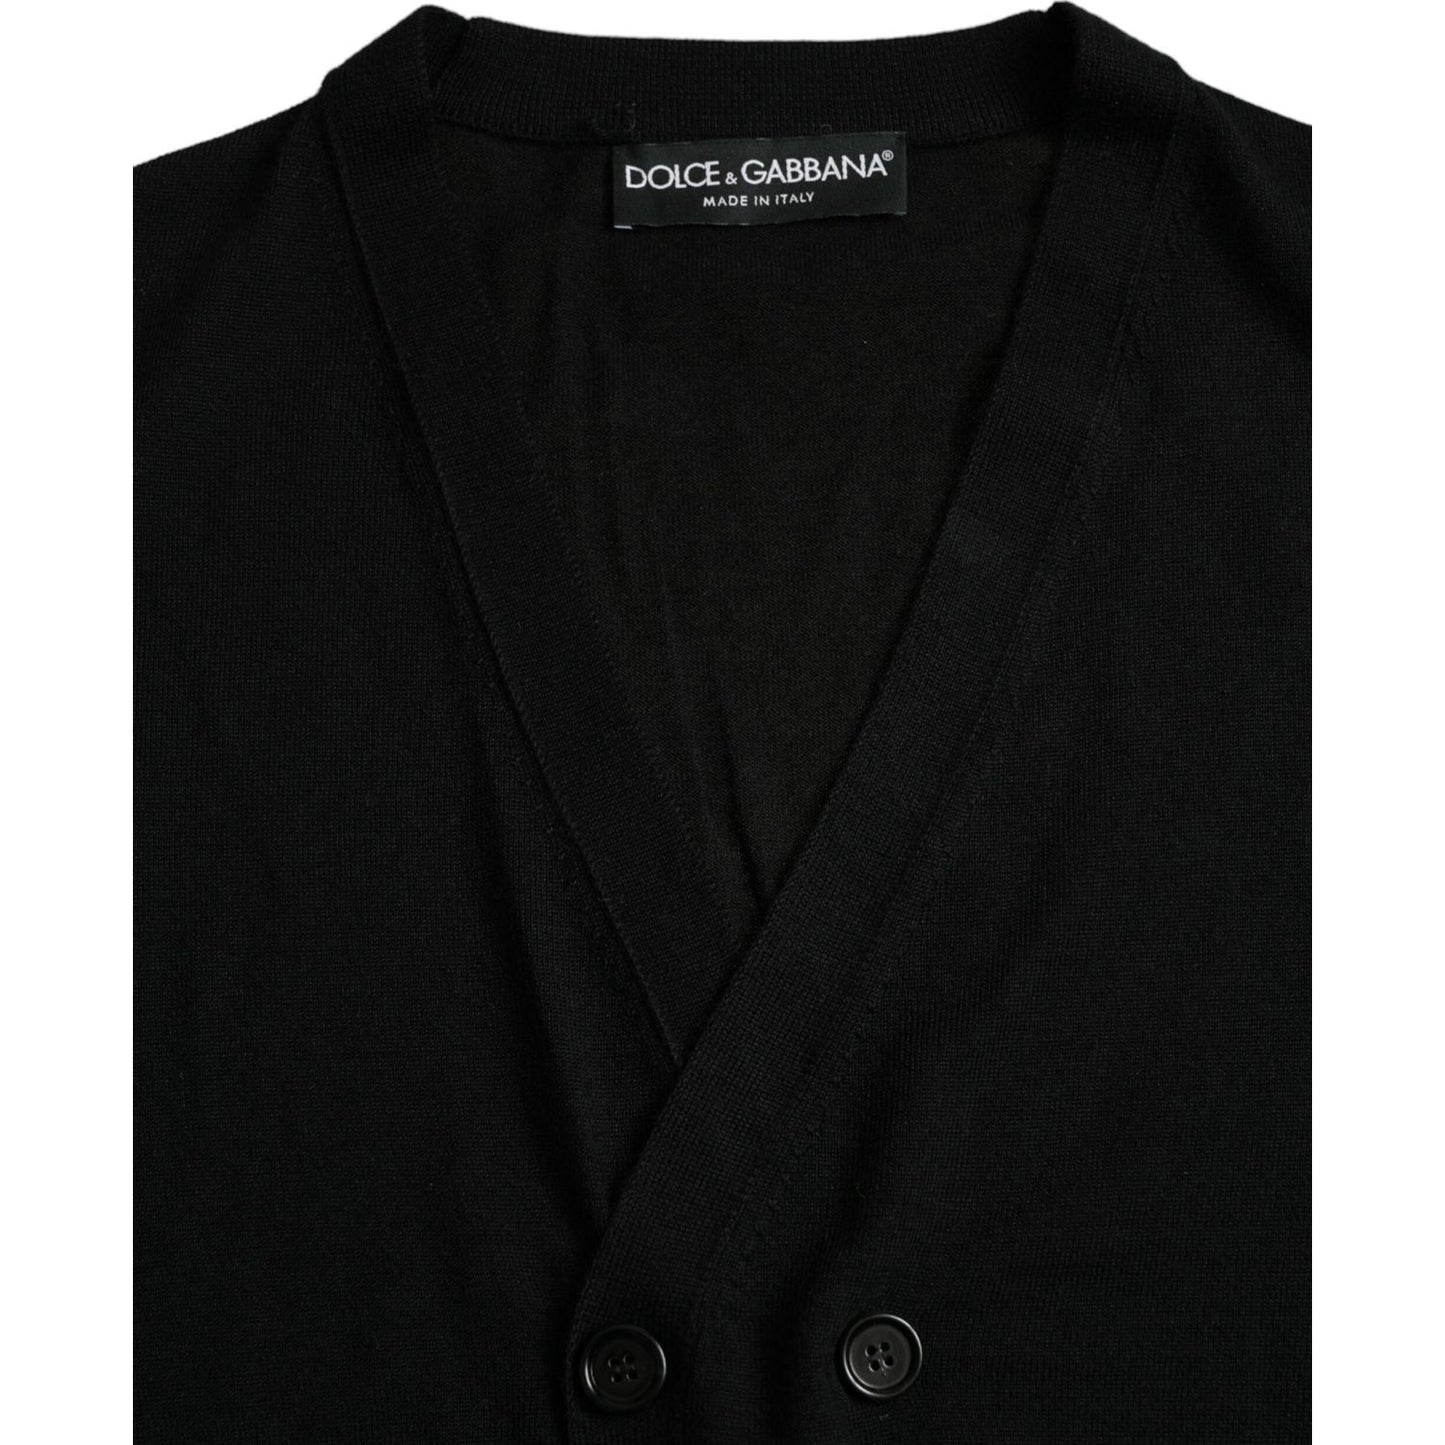 Dolce & Gabbana Black Cashmere Knit Long Sleeves Cardigan Sweater black-cashmere-knit-long-sleeves-cardigan-sweater